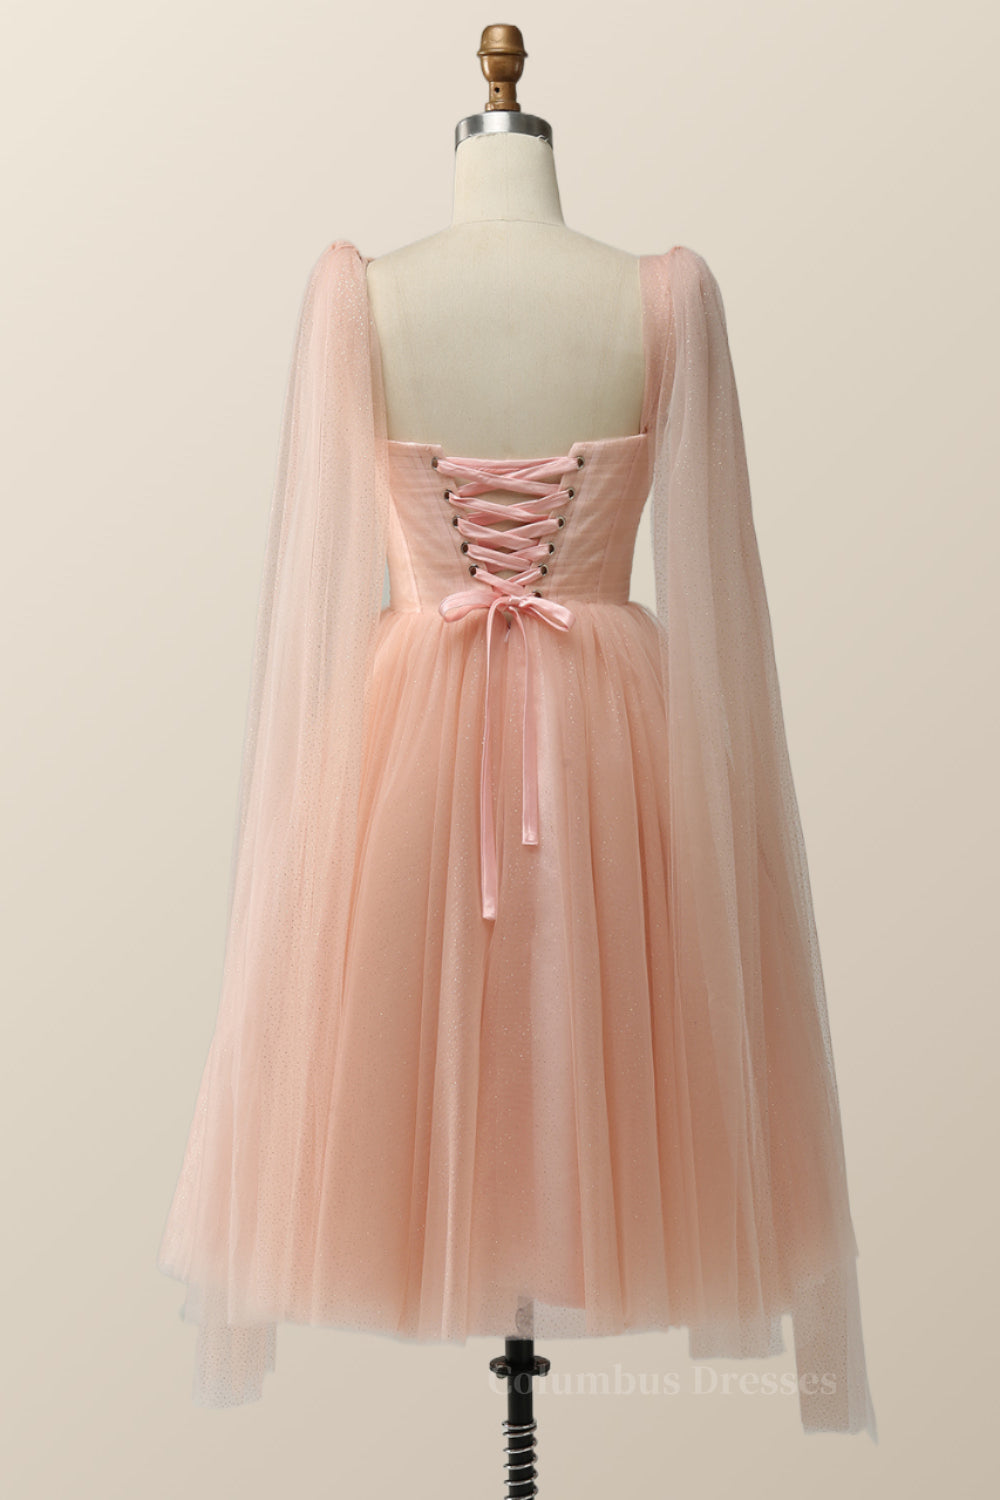 Prom Dresses Blue Light, Pink Tulle Corset Short Party Dress